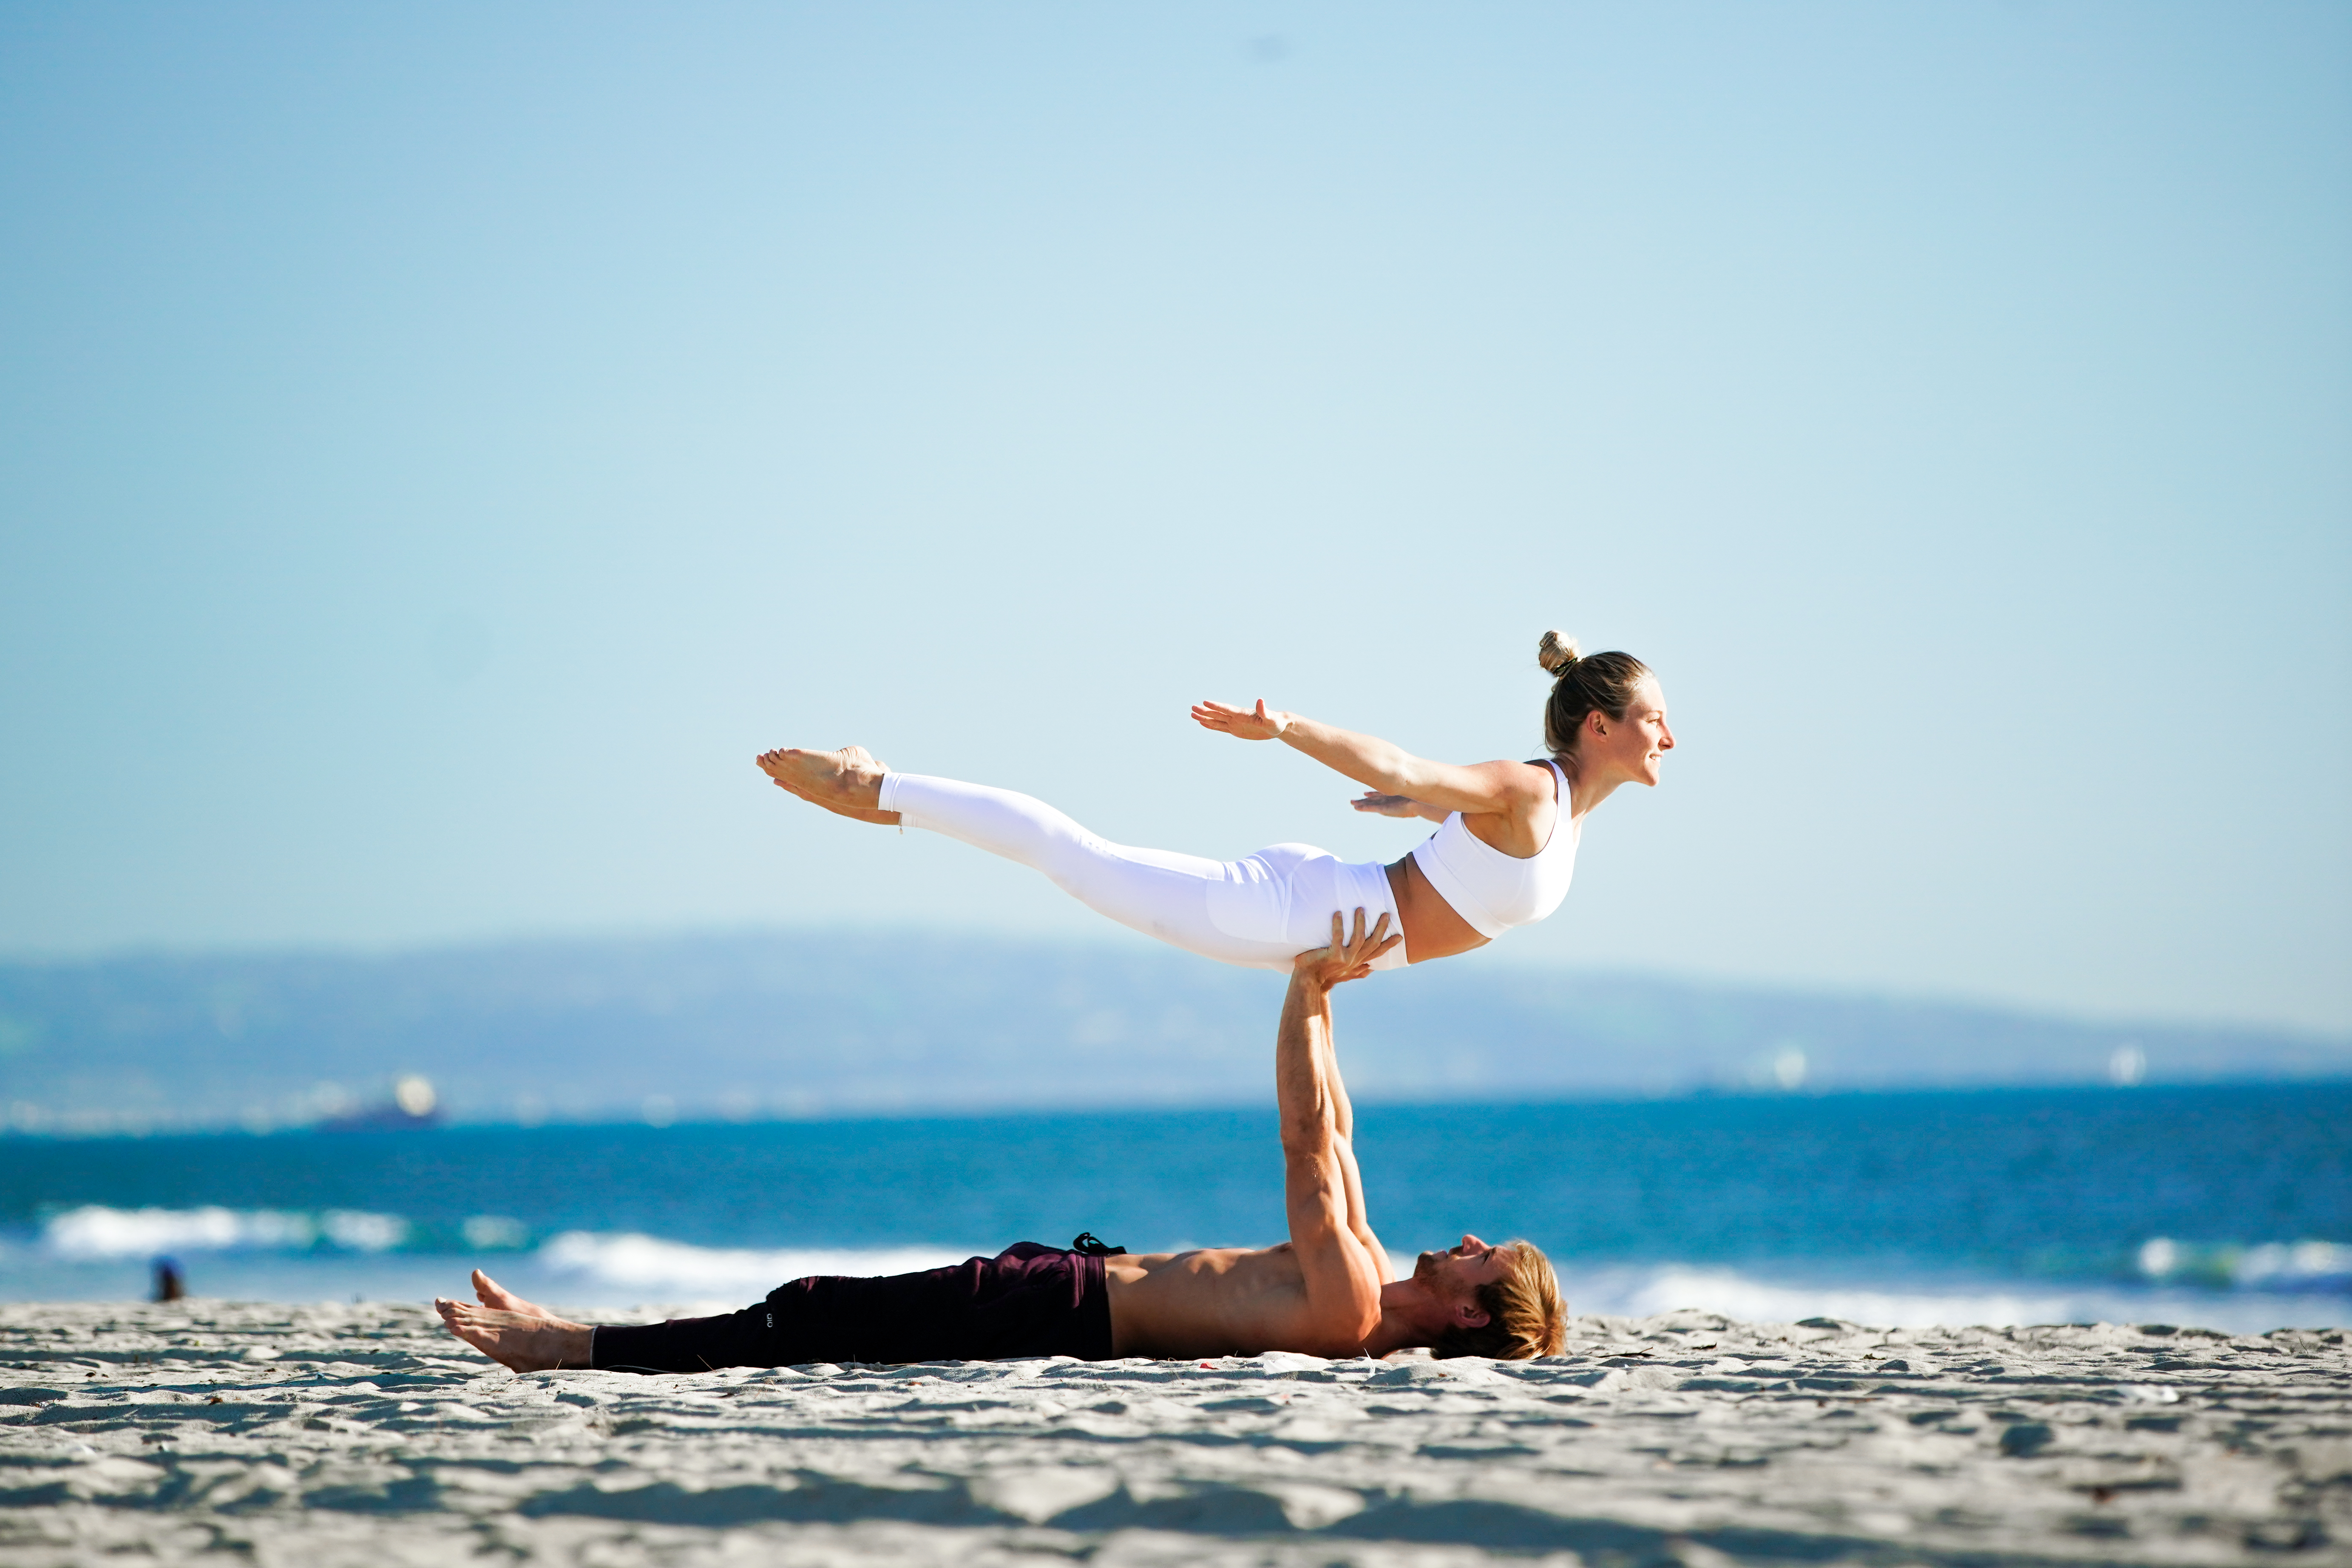 Theme Acroyoga Yoga Image & Photo (Free Trial) | Bigstock